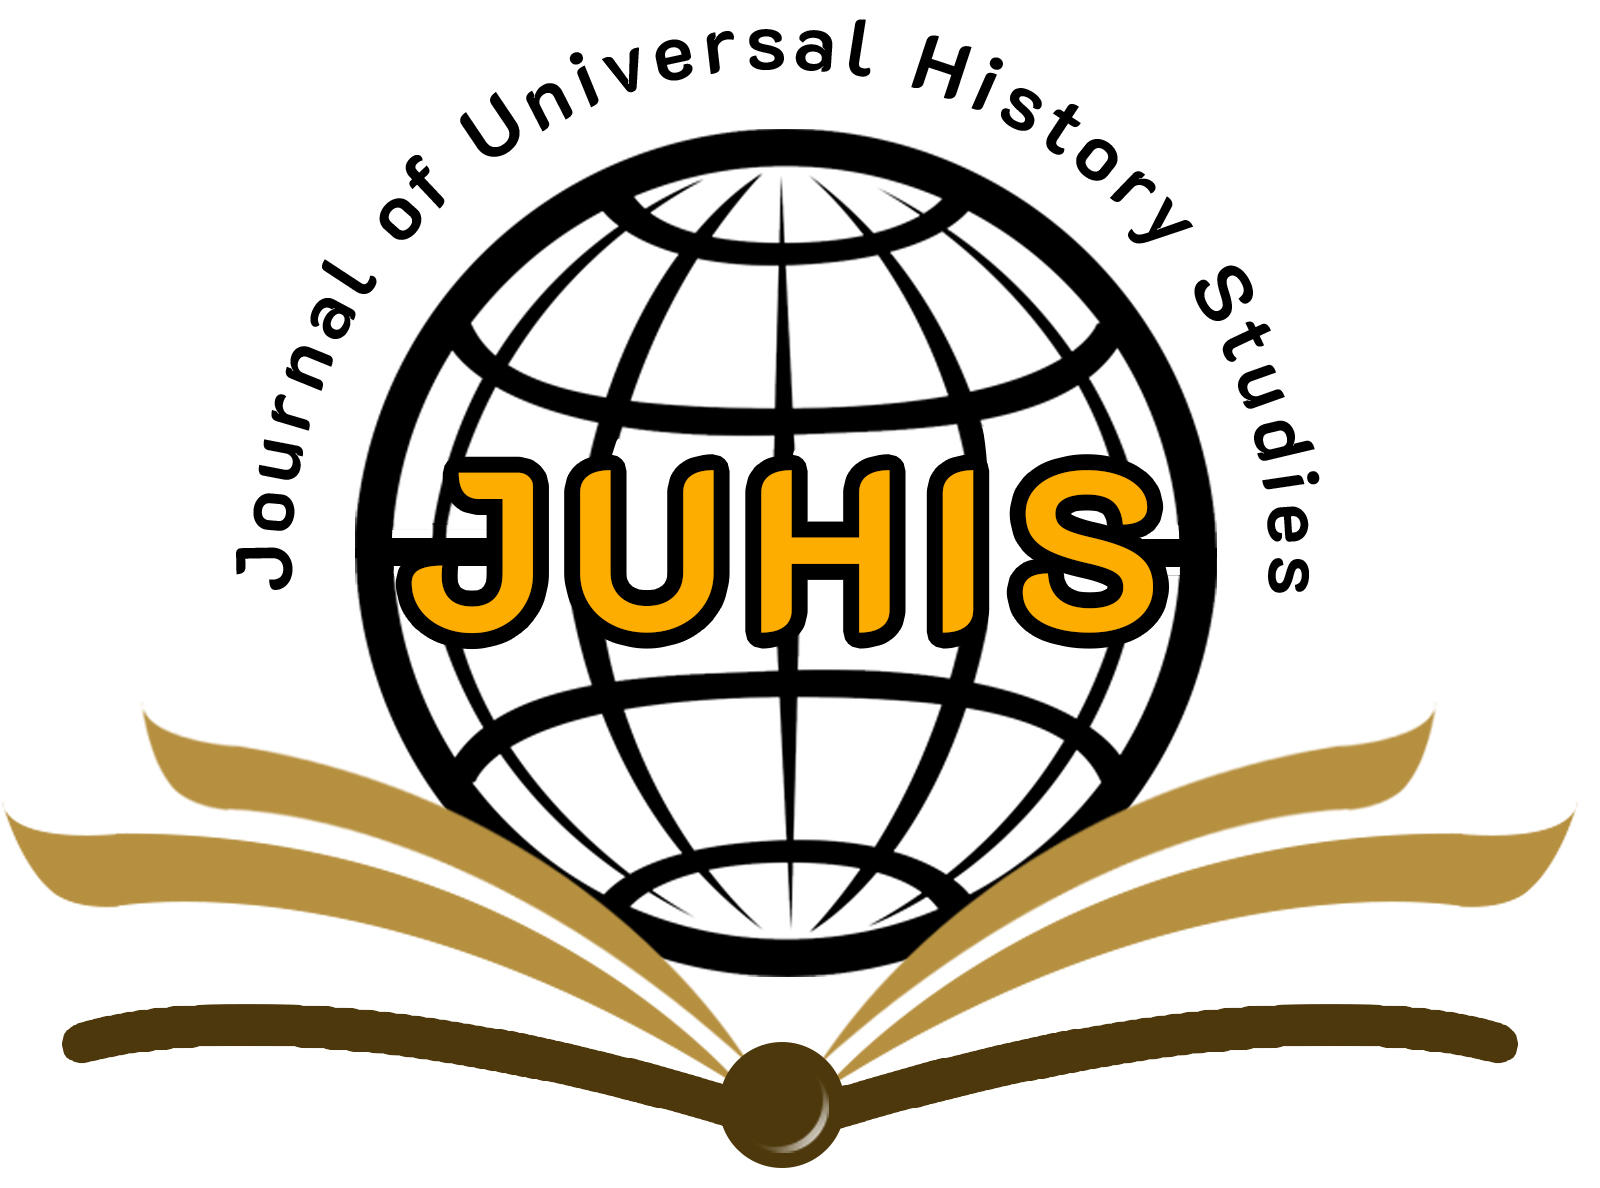 Journal of Universal History Studies